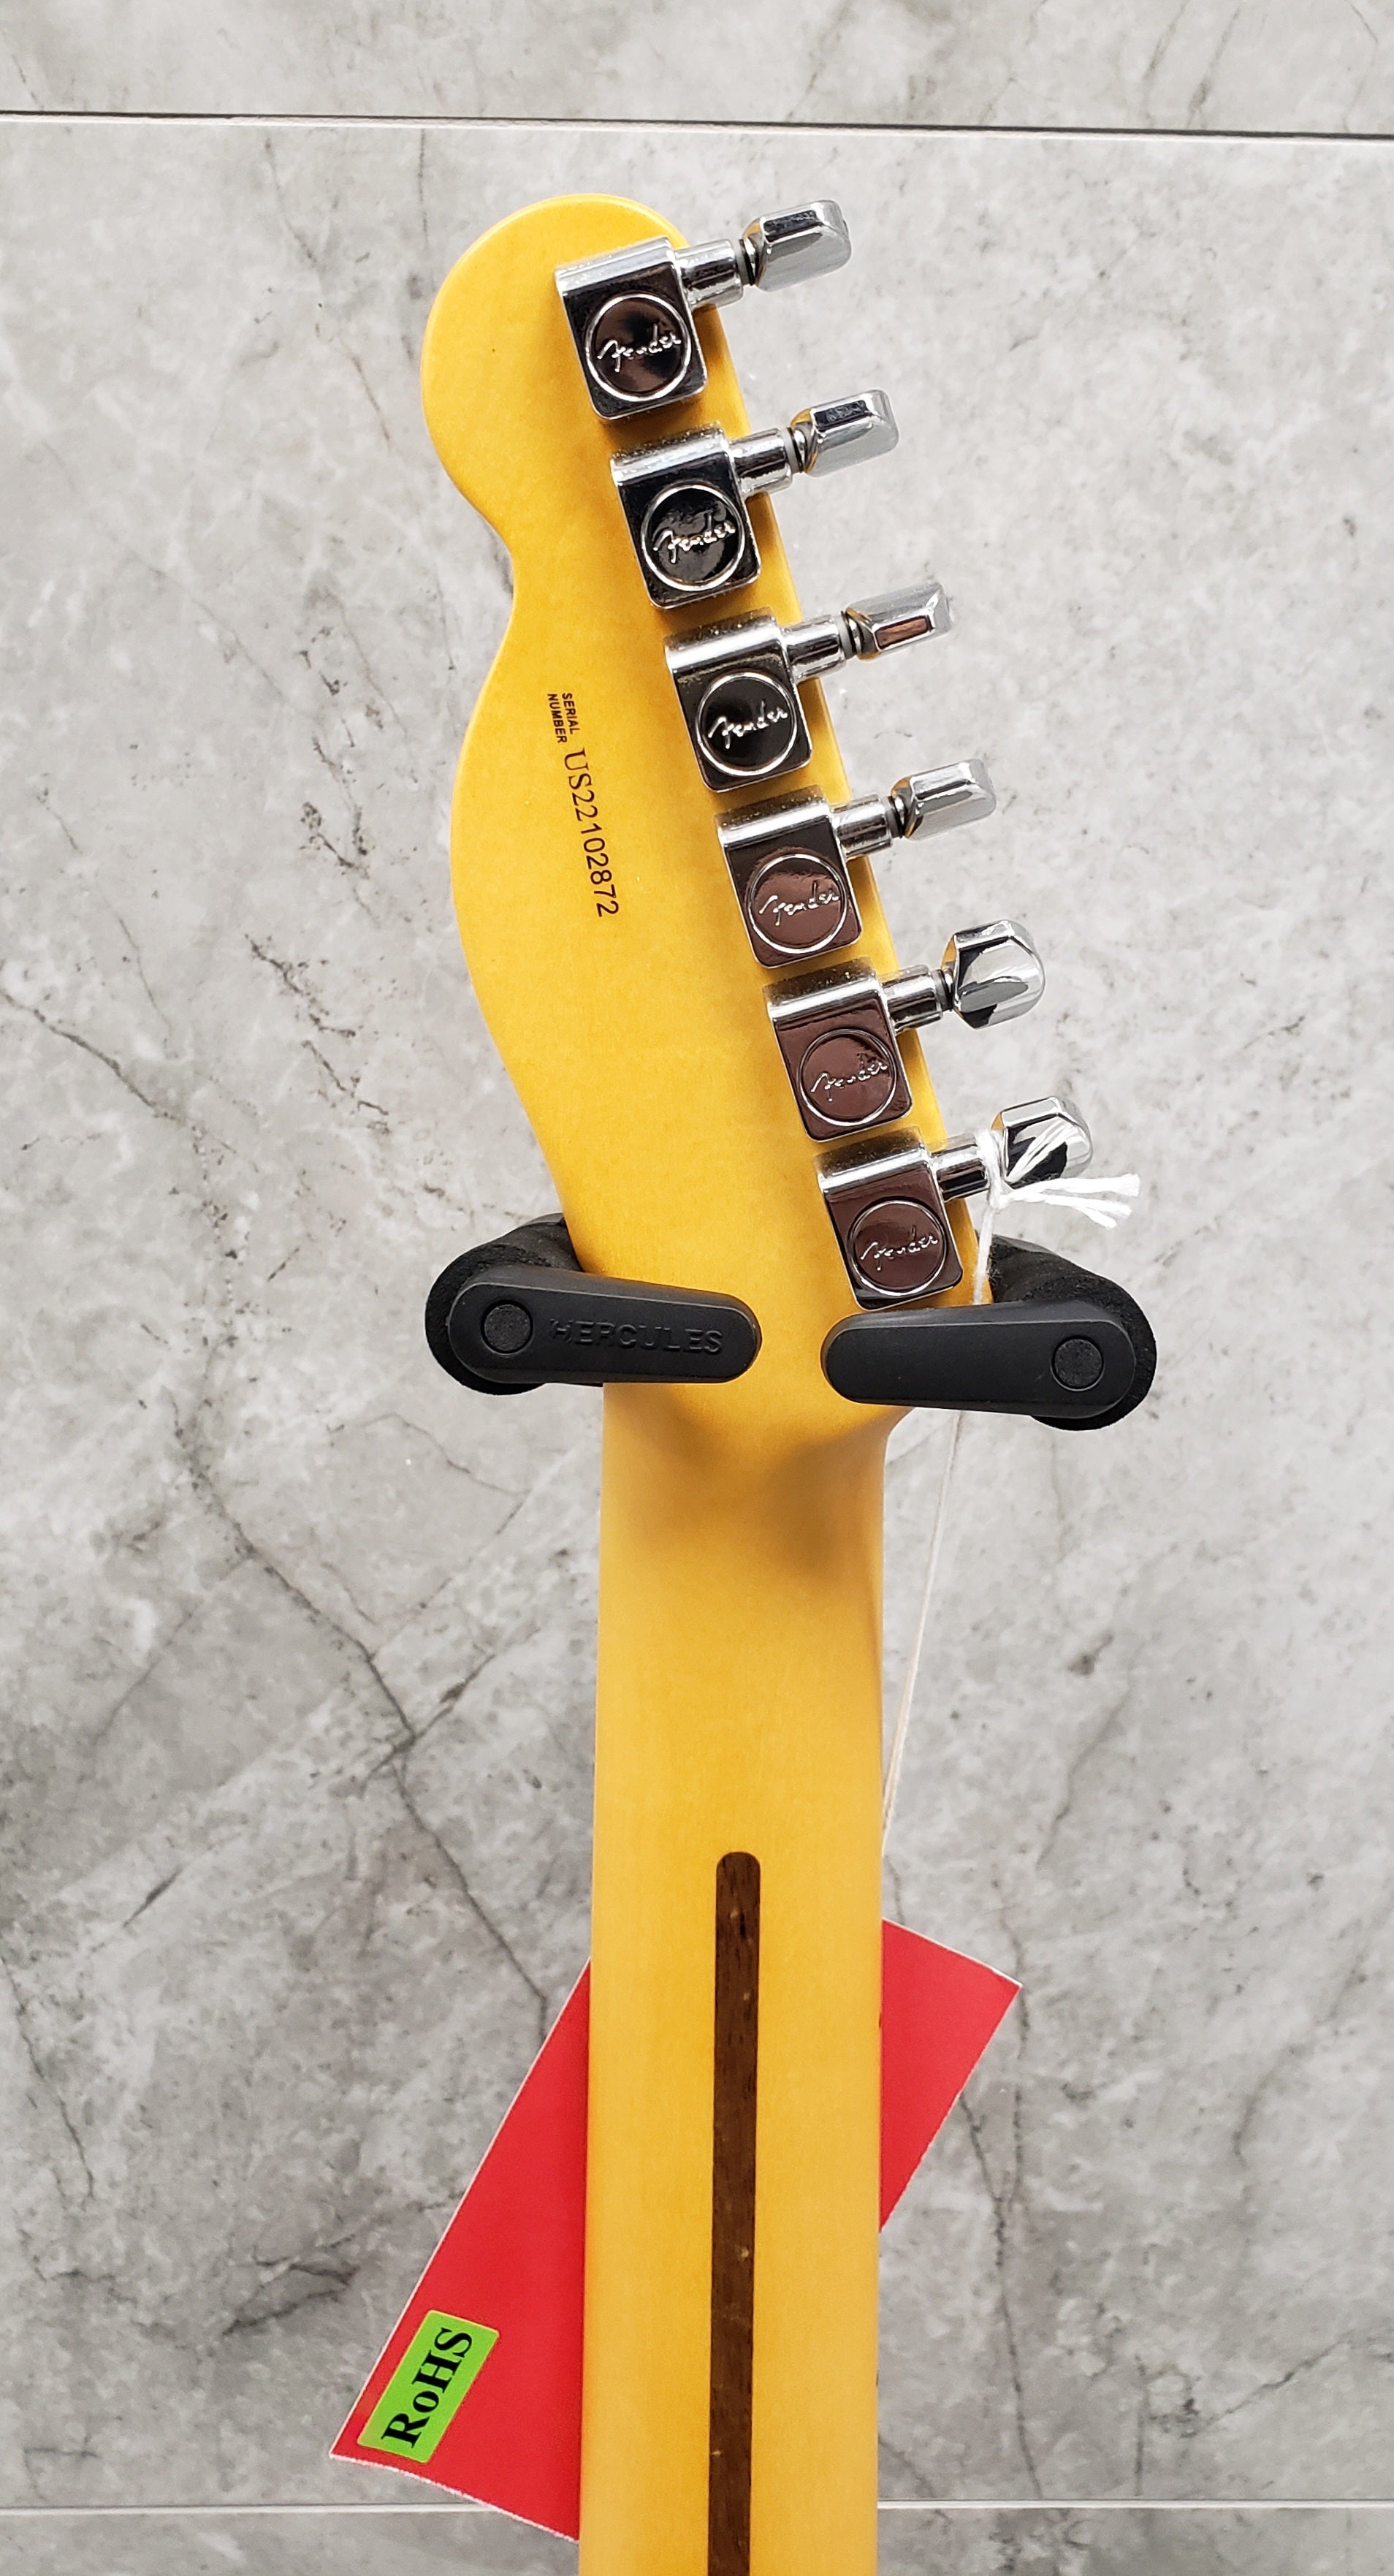 Fender American Professional II Telecaster Maple Fingerboard, Roasted Pine F-0113942763 SERIAL NUMBER US22102872 - 7.0 LBS